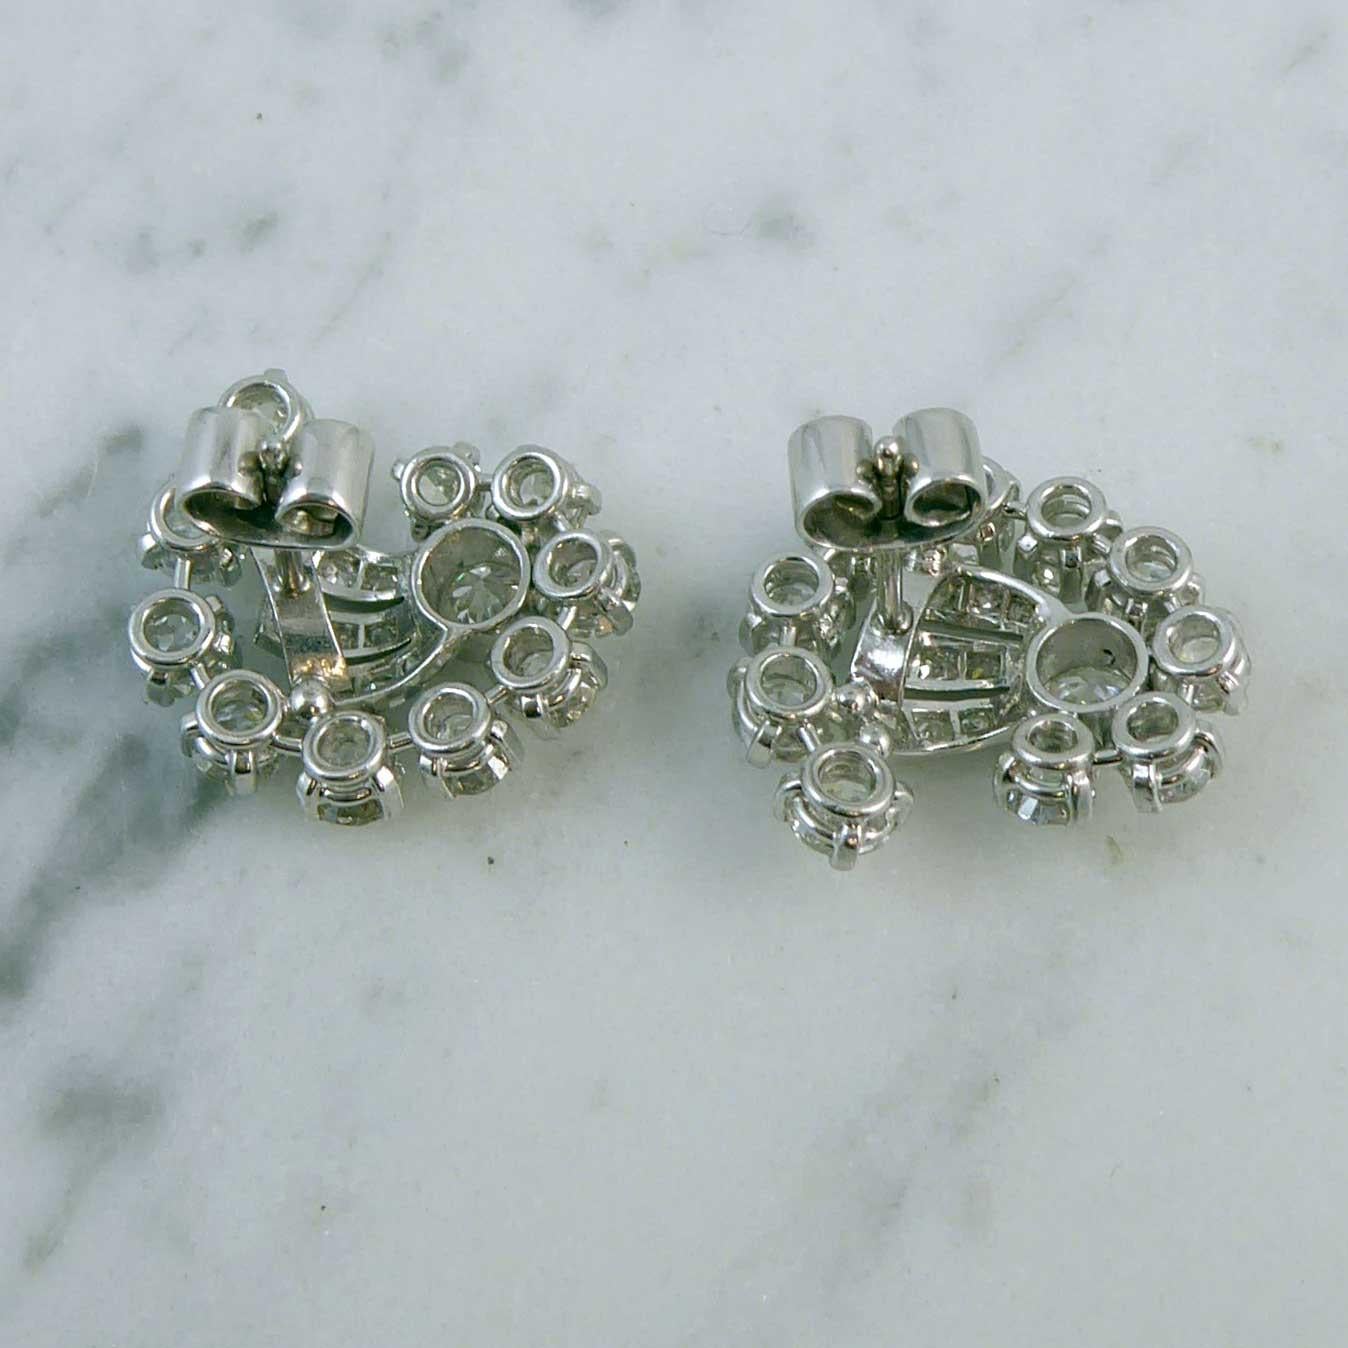 Women's Vintage 3.74 Carat Old European Cut Diamond Earrings, 1950s-1960s Cluster Stud